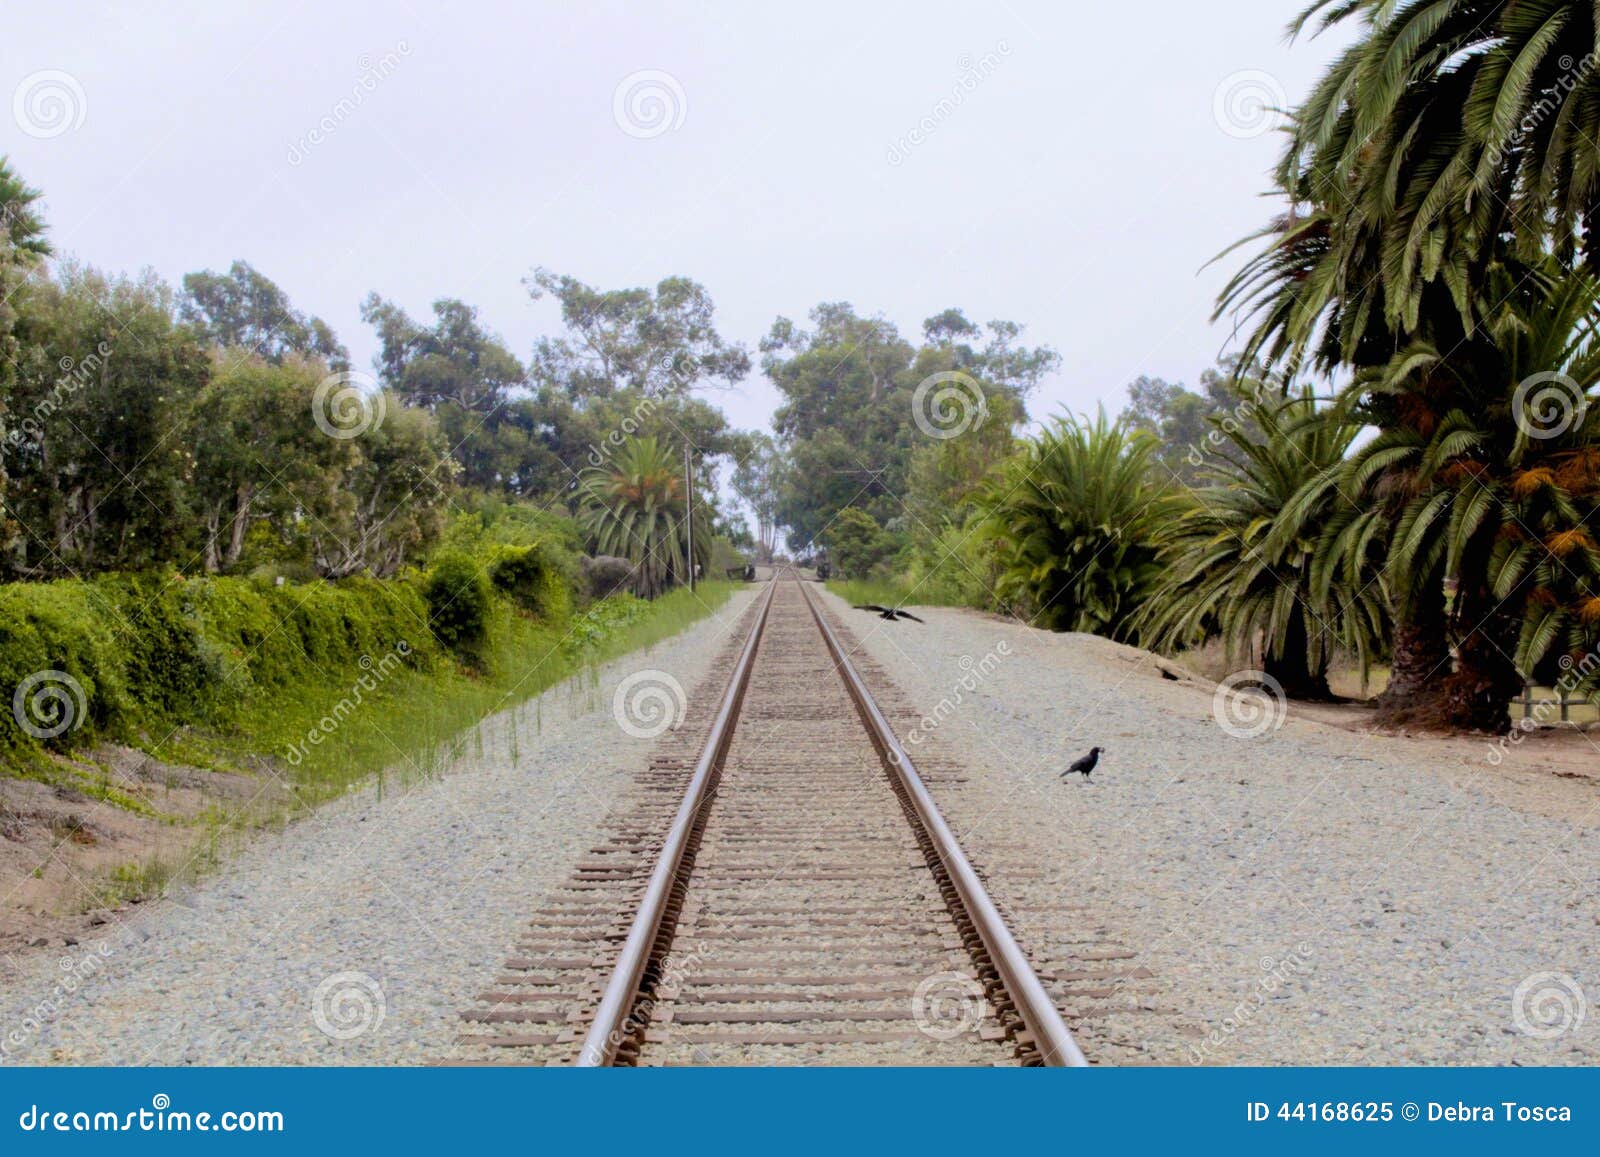 train tracks carpinteria california